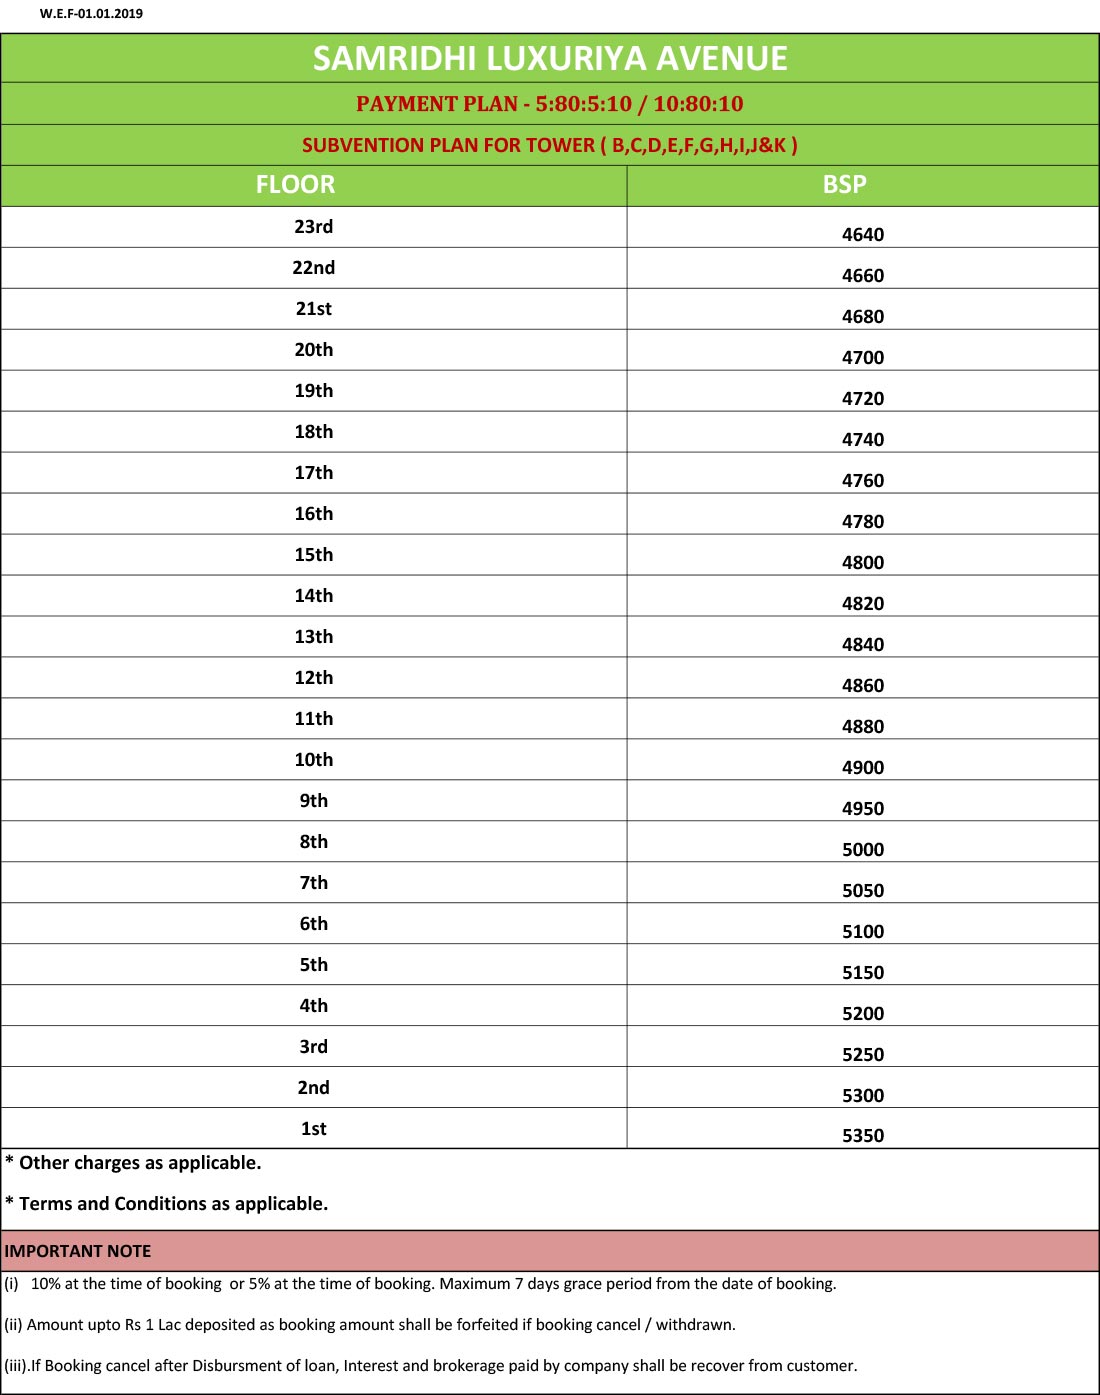 Luxuriya-Price-List-3-subvension